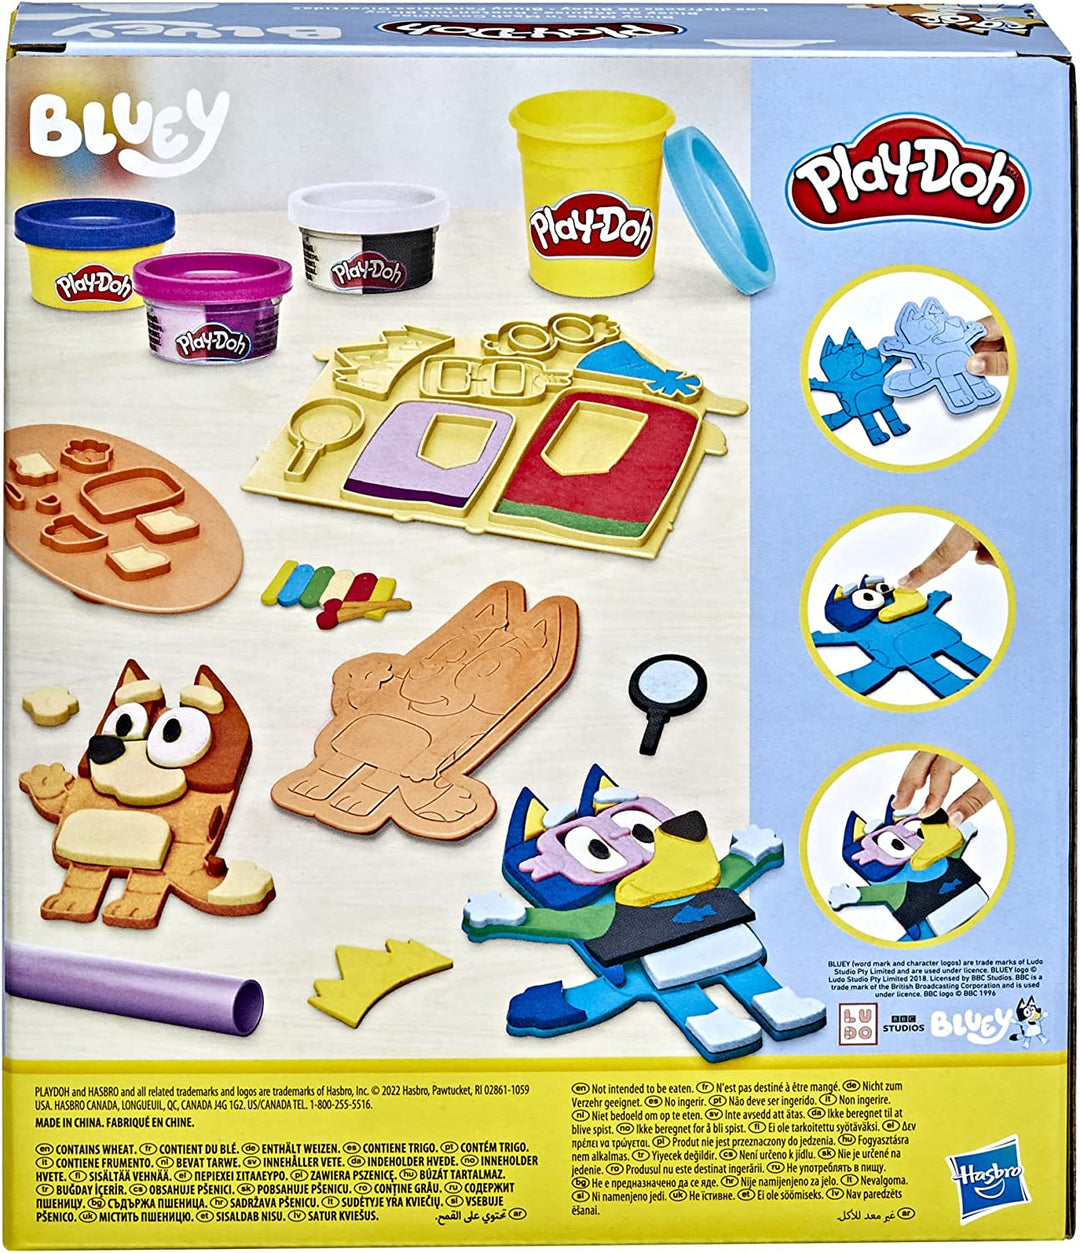 Play-Doh BLUEY MAKE N MASH KOSTÜME